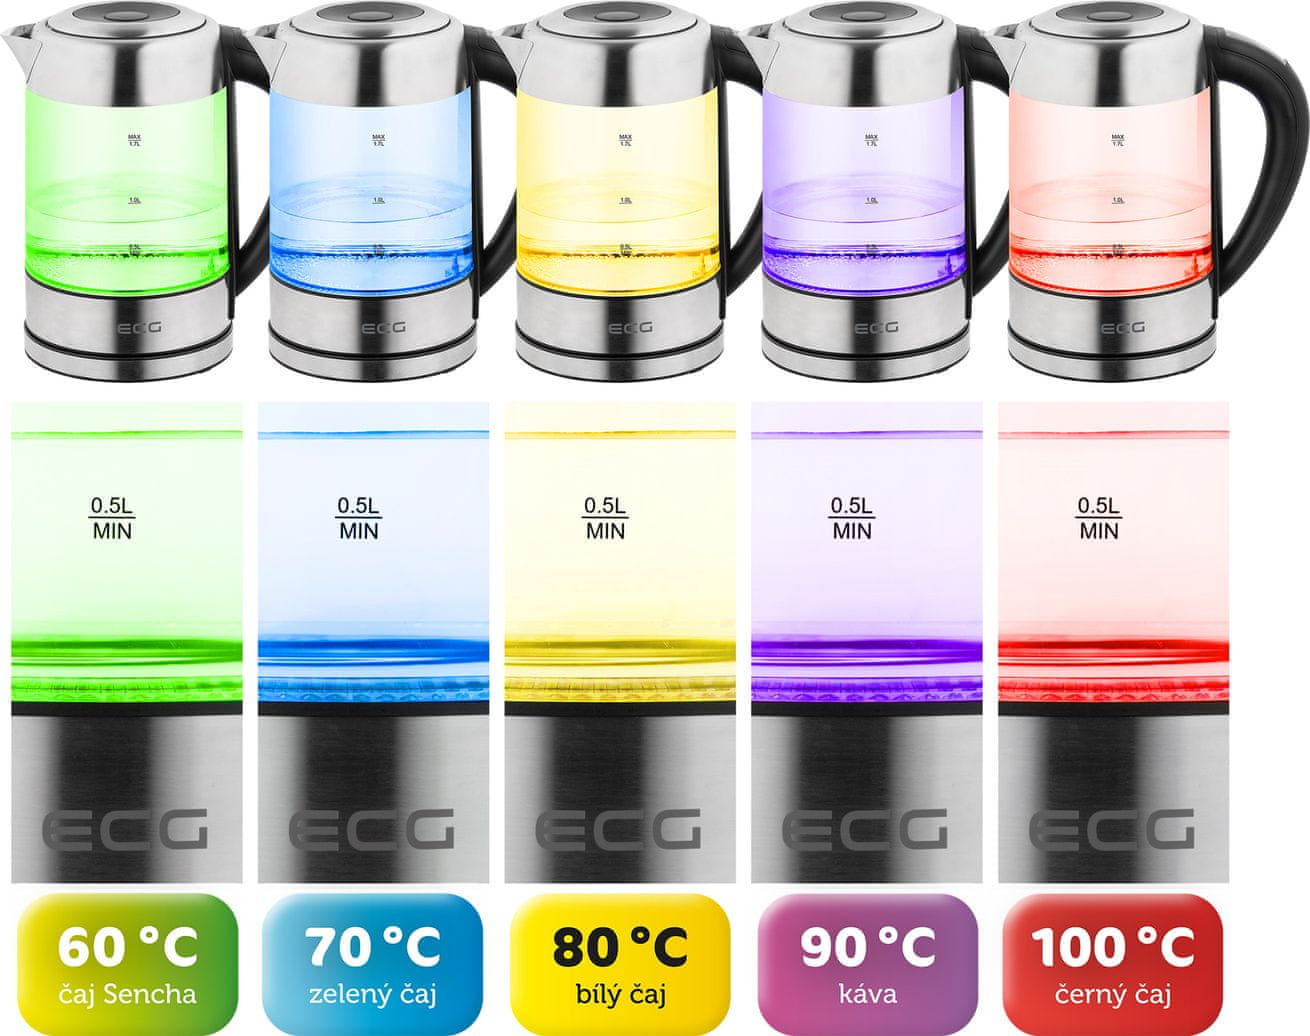  ECG RK 1777 Colore hőmérsékletek